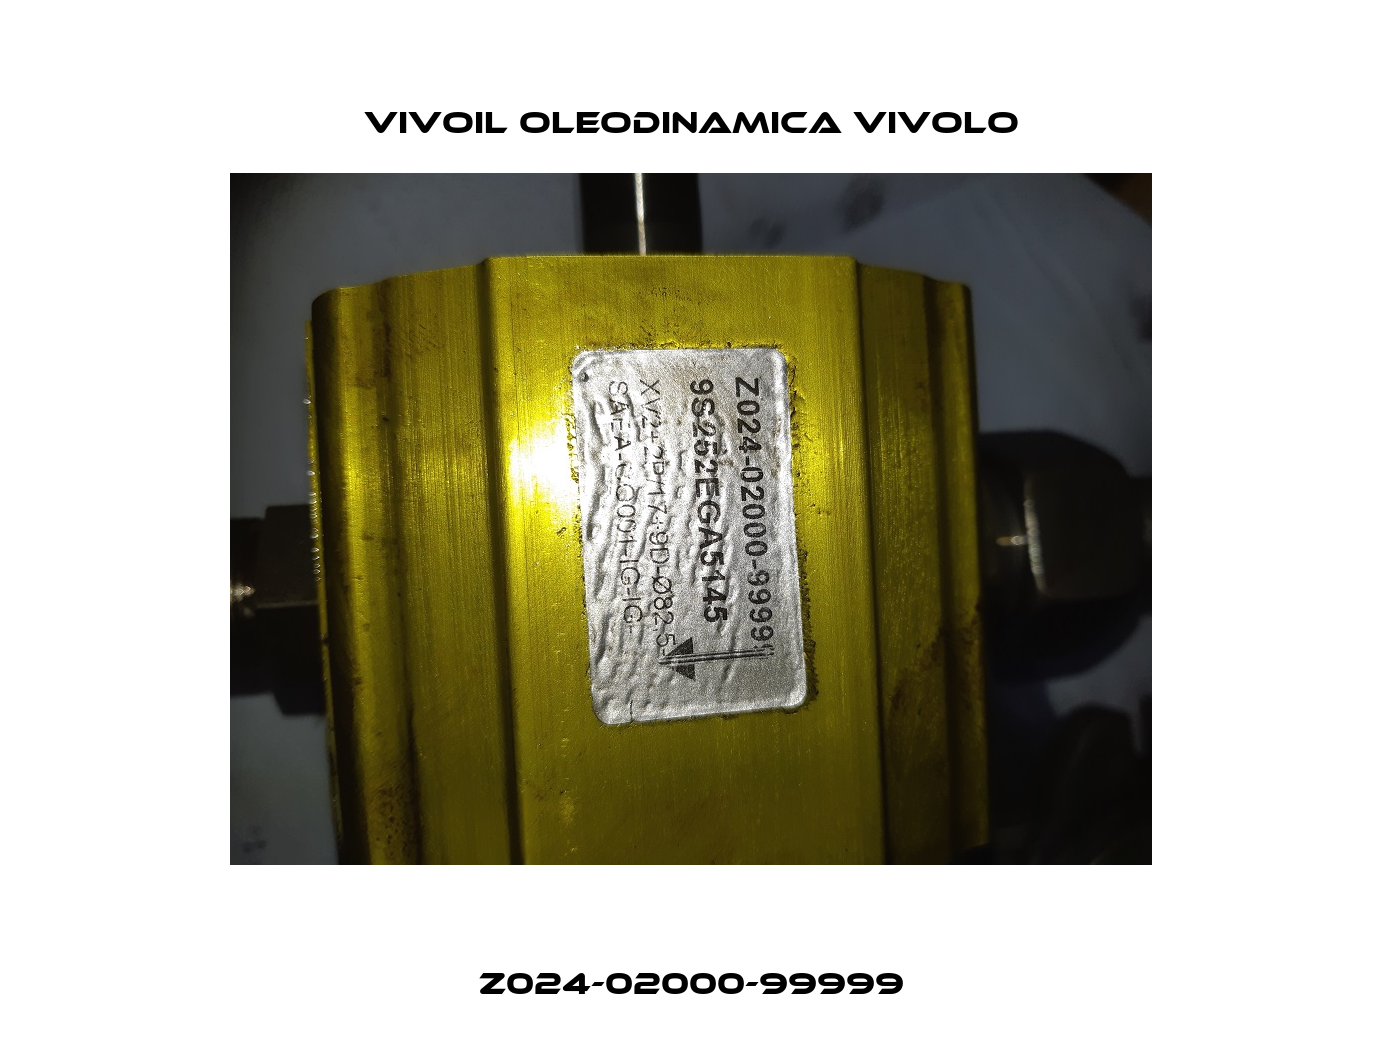 Z024-02000-99999 Vivoil Oleodinamica Vivolo